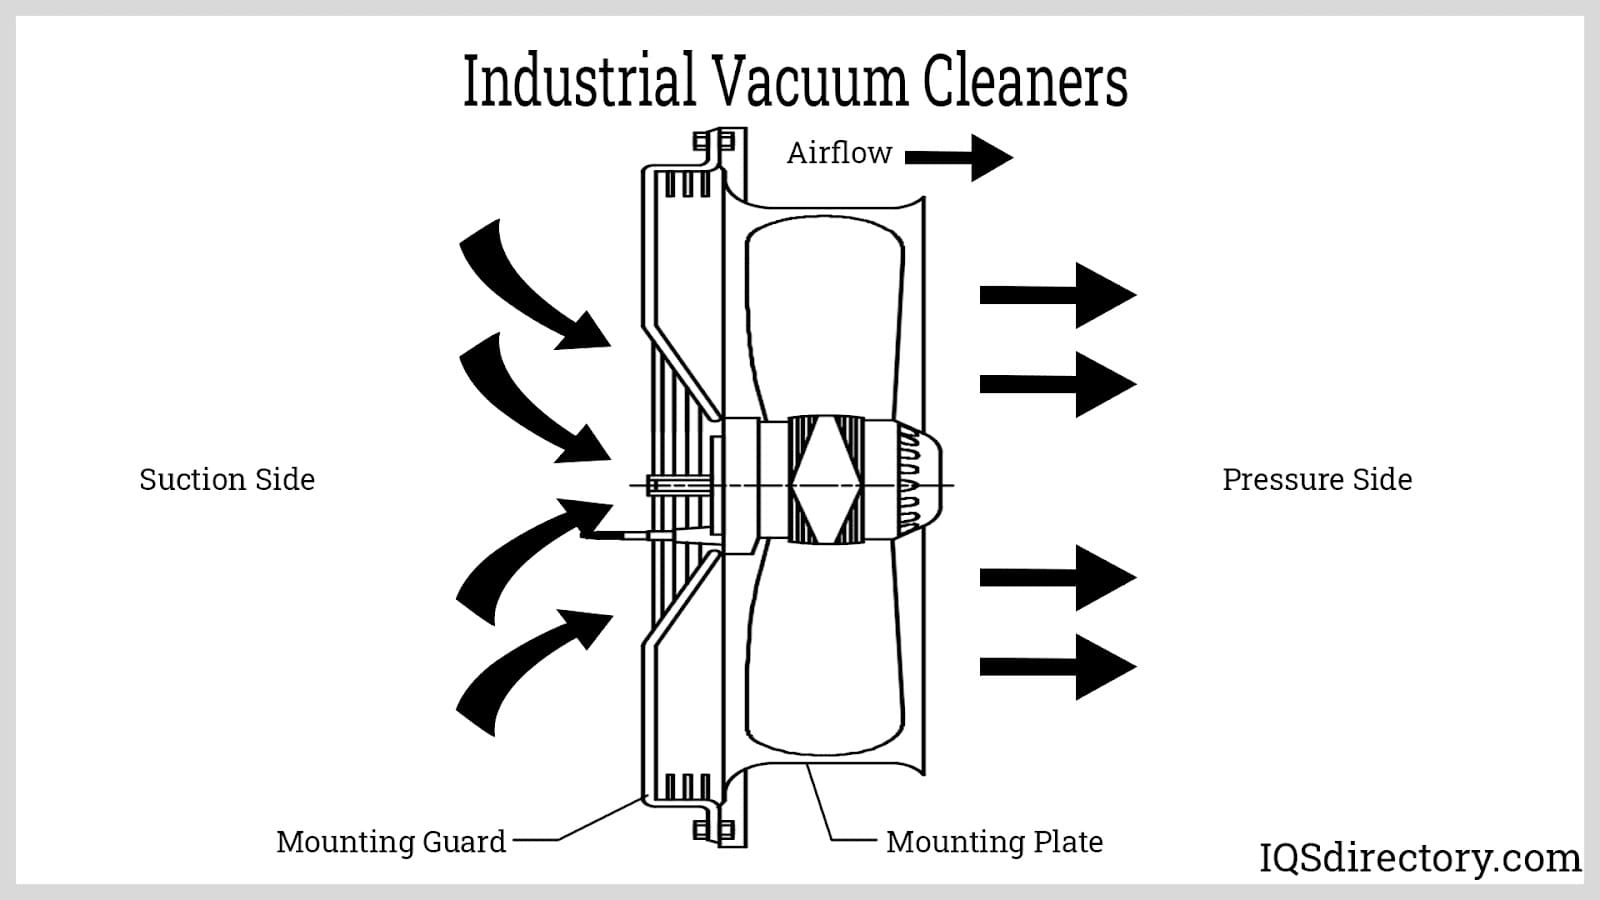 Pressure Drop Process for Industrial Vacuum Cleaners